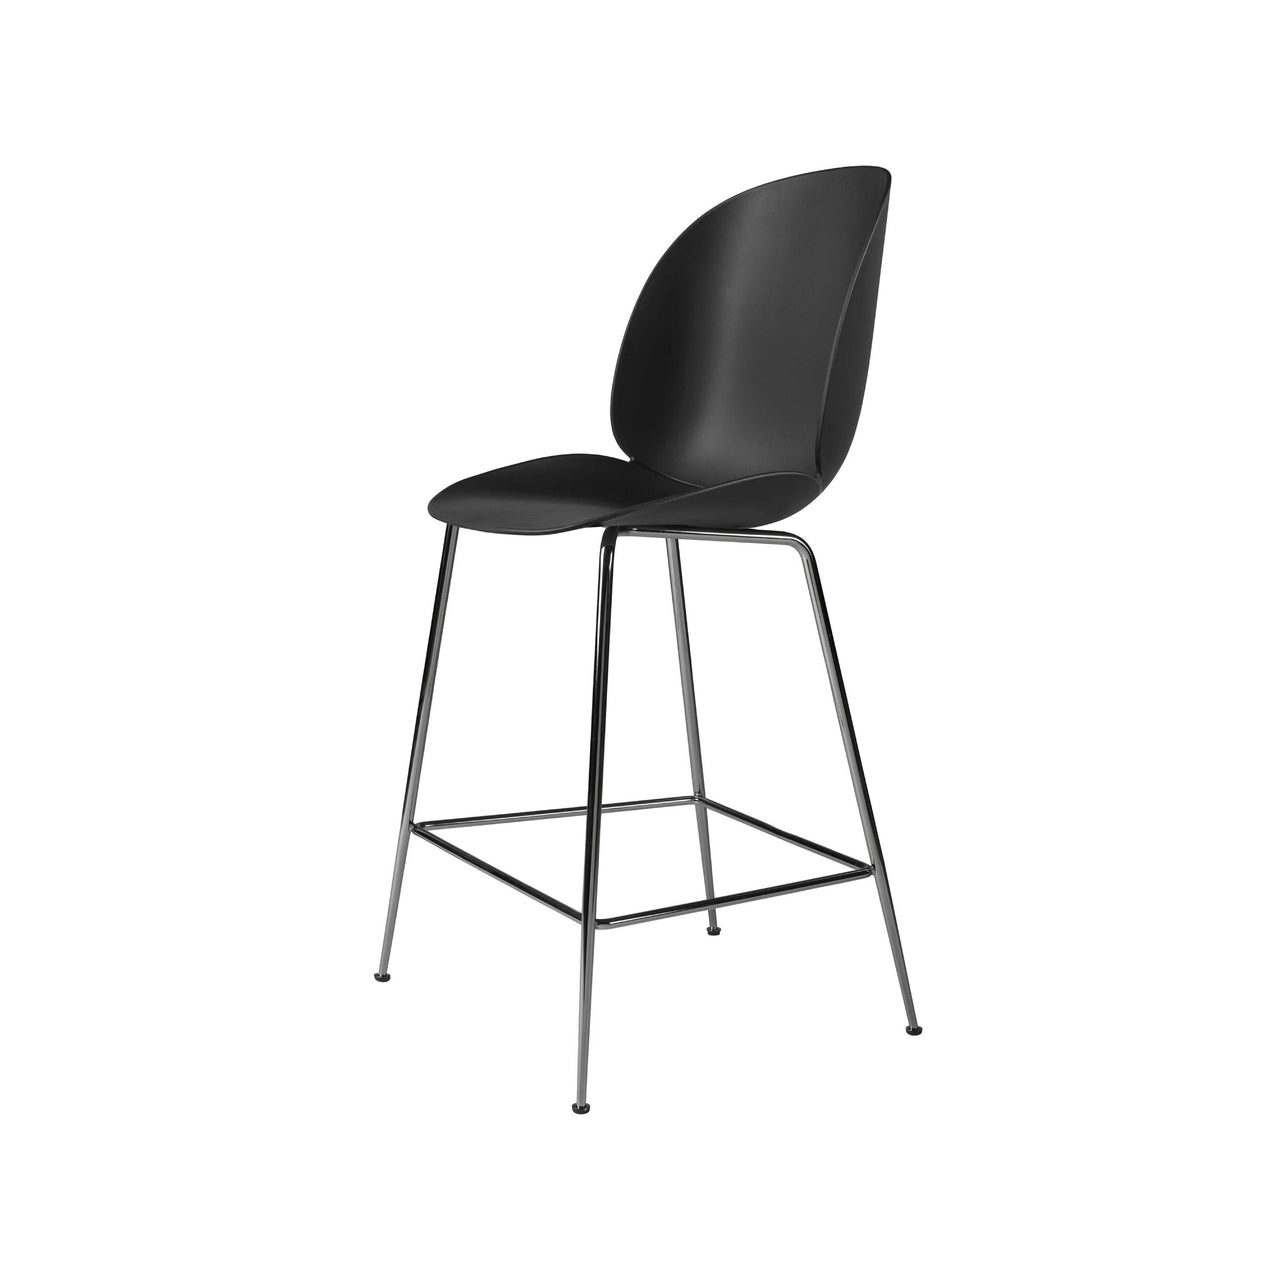 Beetle Bar + Counter Chair: Counter + Black + Black Chrome